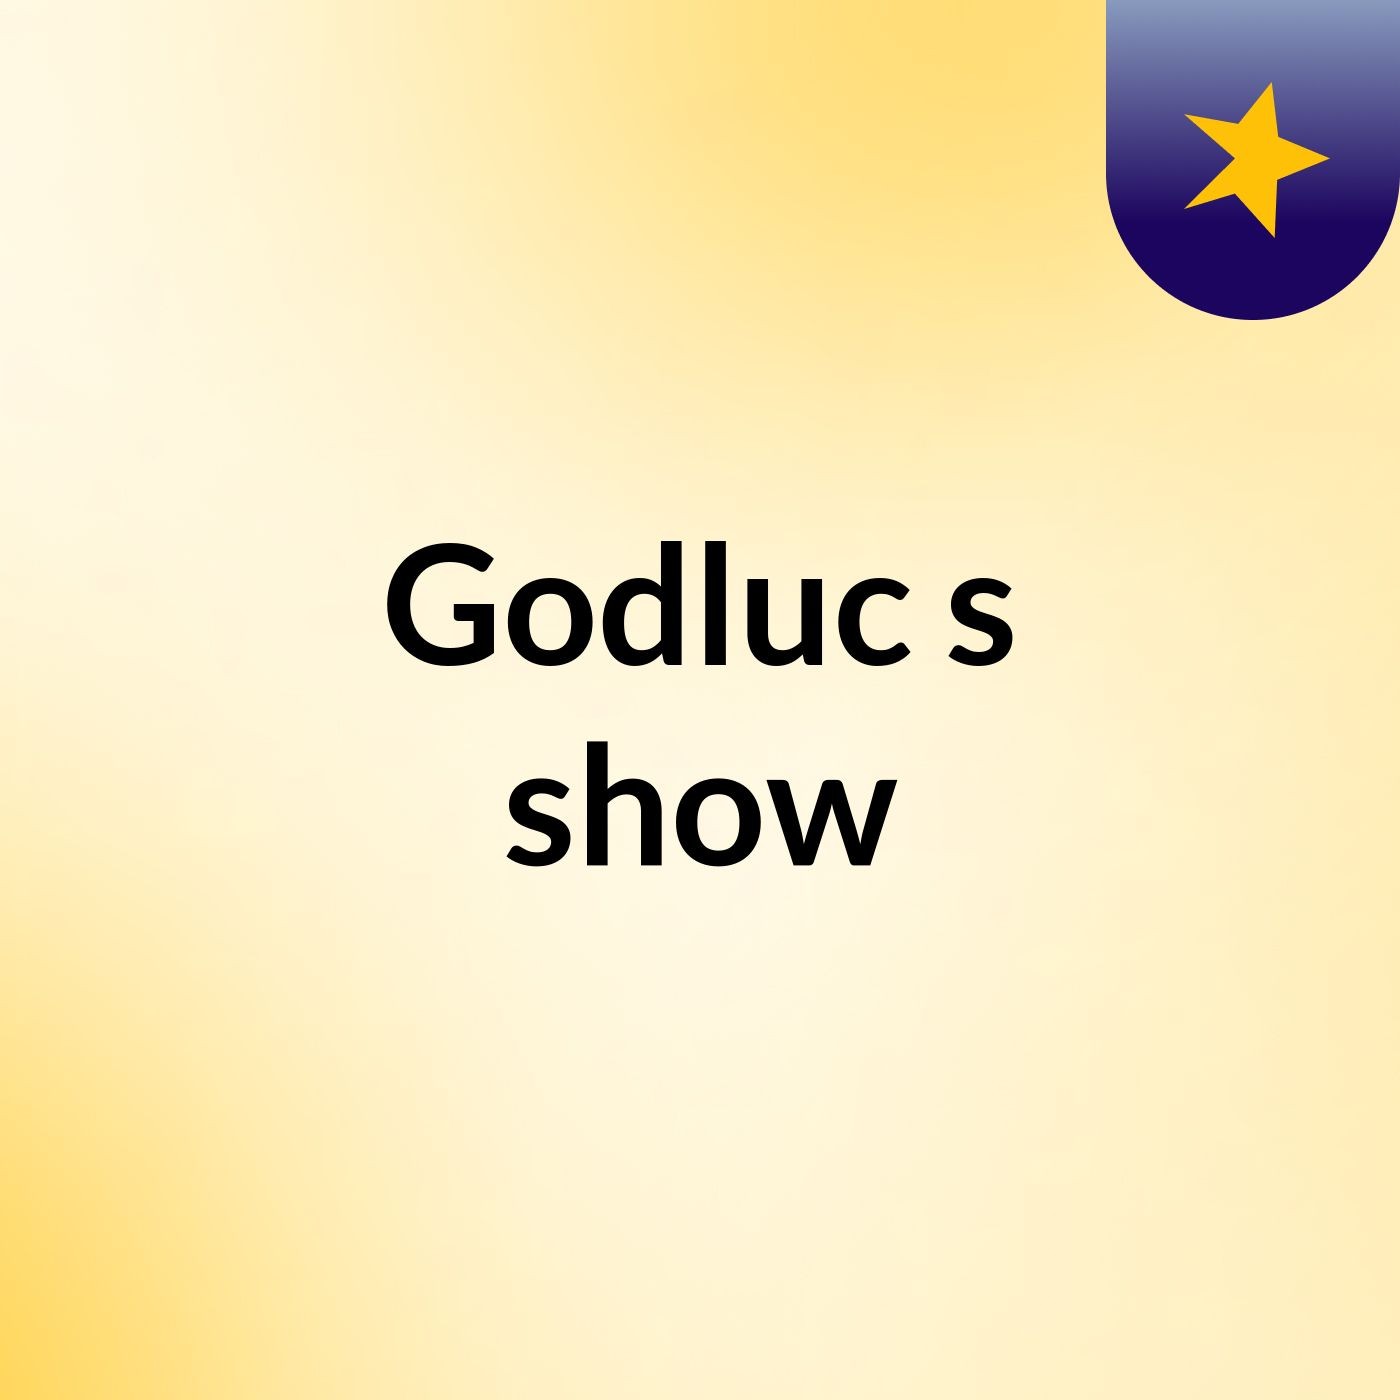 Godluc's show